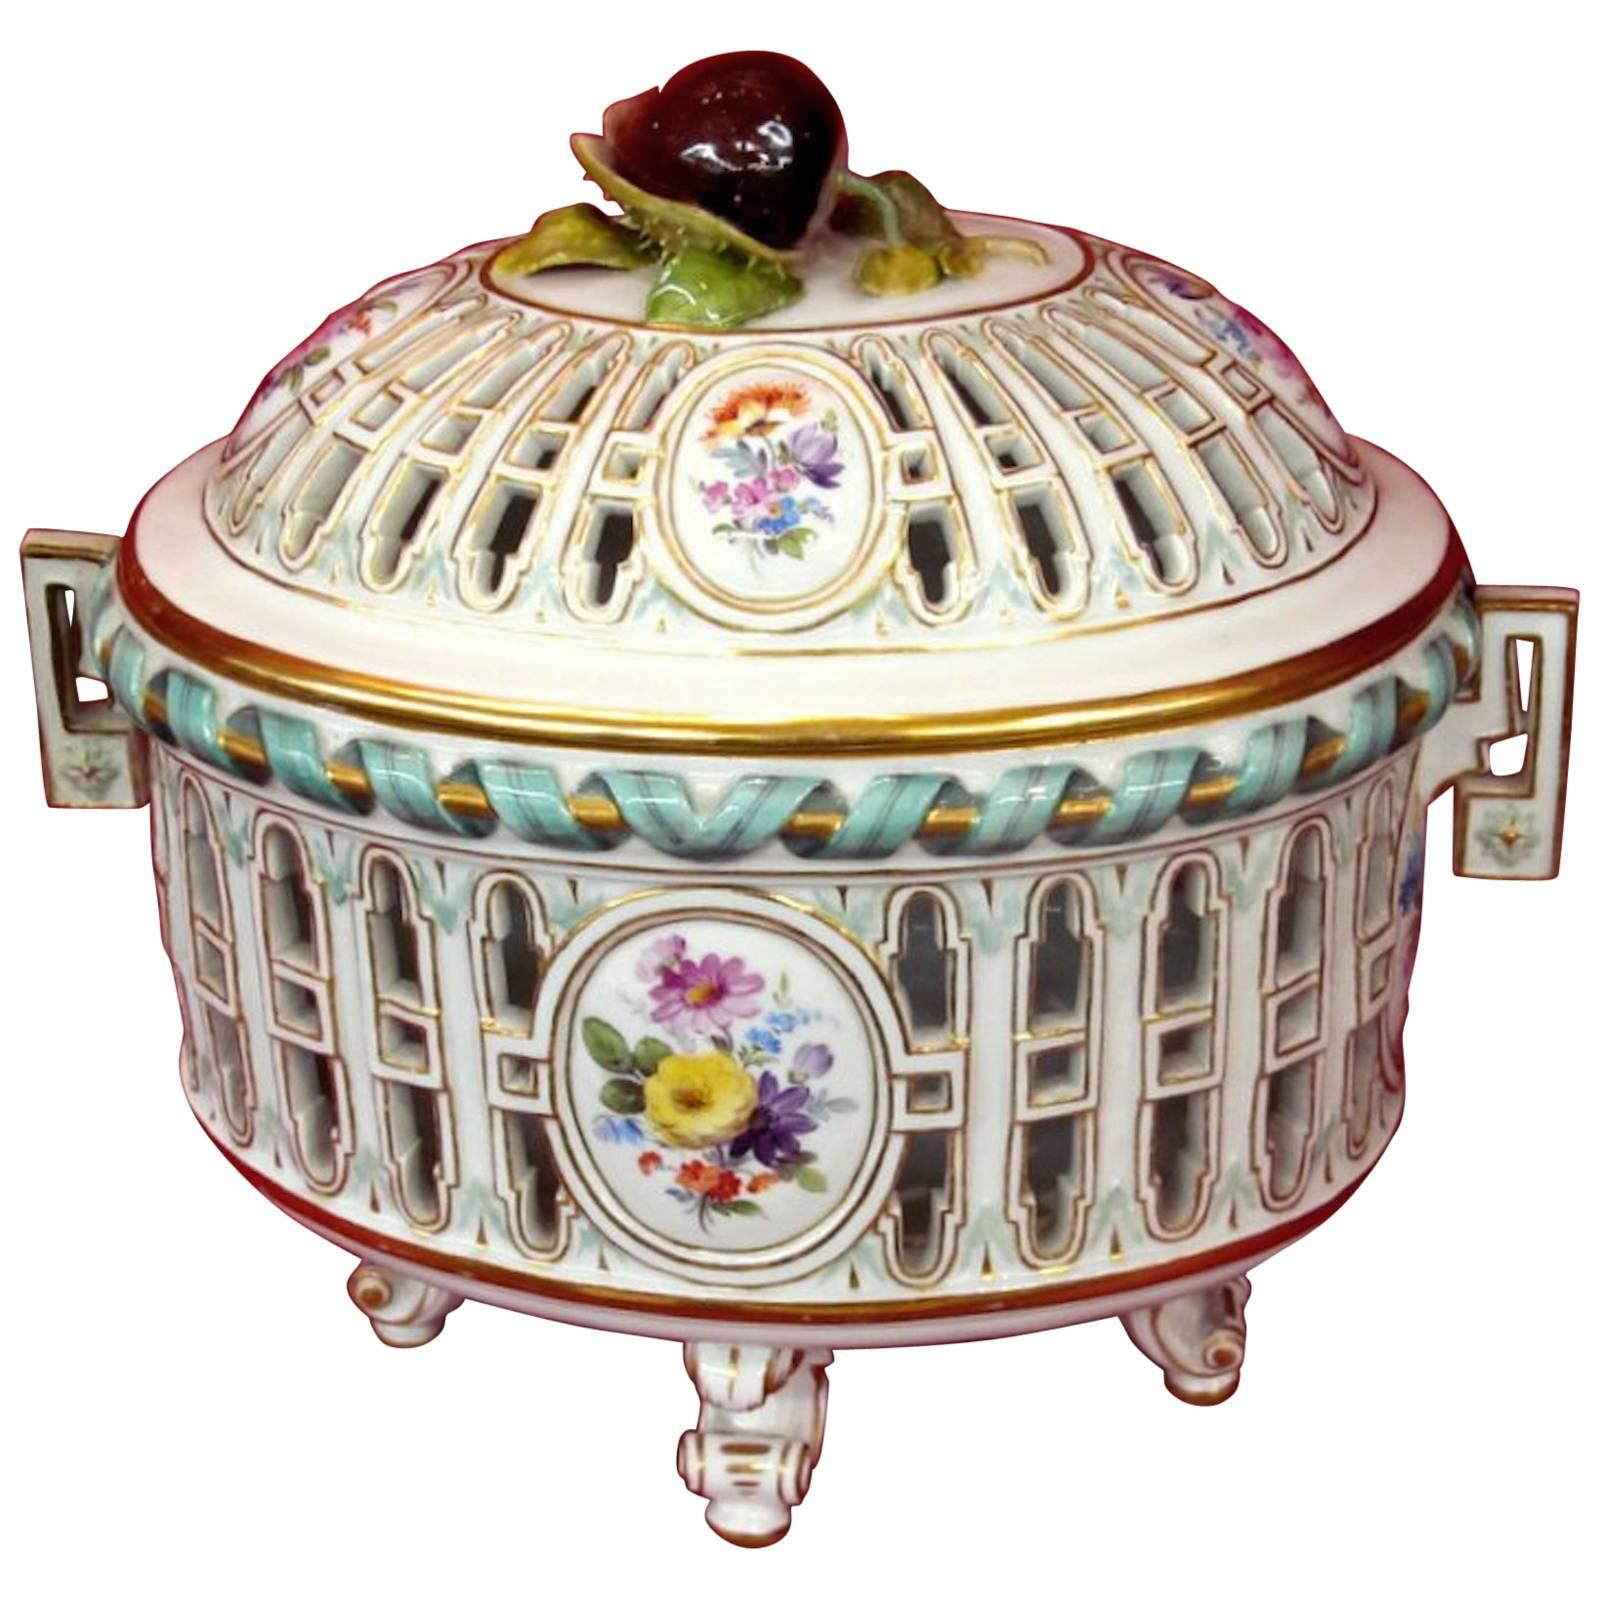 Antique Dresden or Meissen Hand-Painted Porcelain Chestnut Basket or Tureen